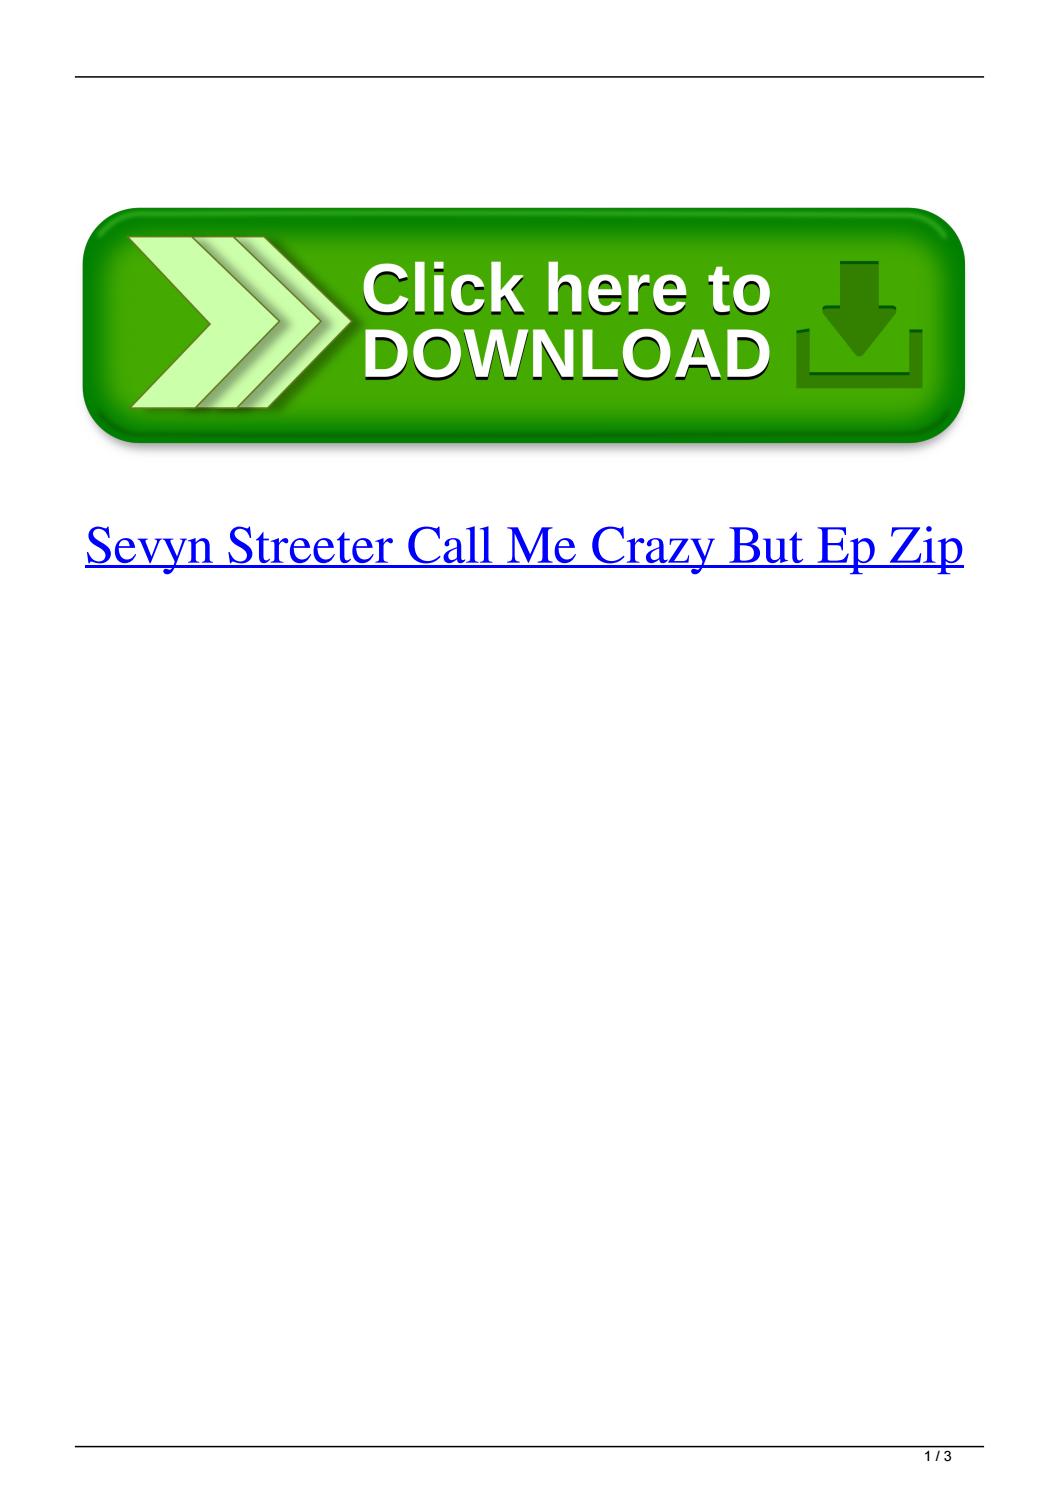 Sevyn Streeter Call Me Crazy But Zip Download